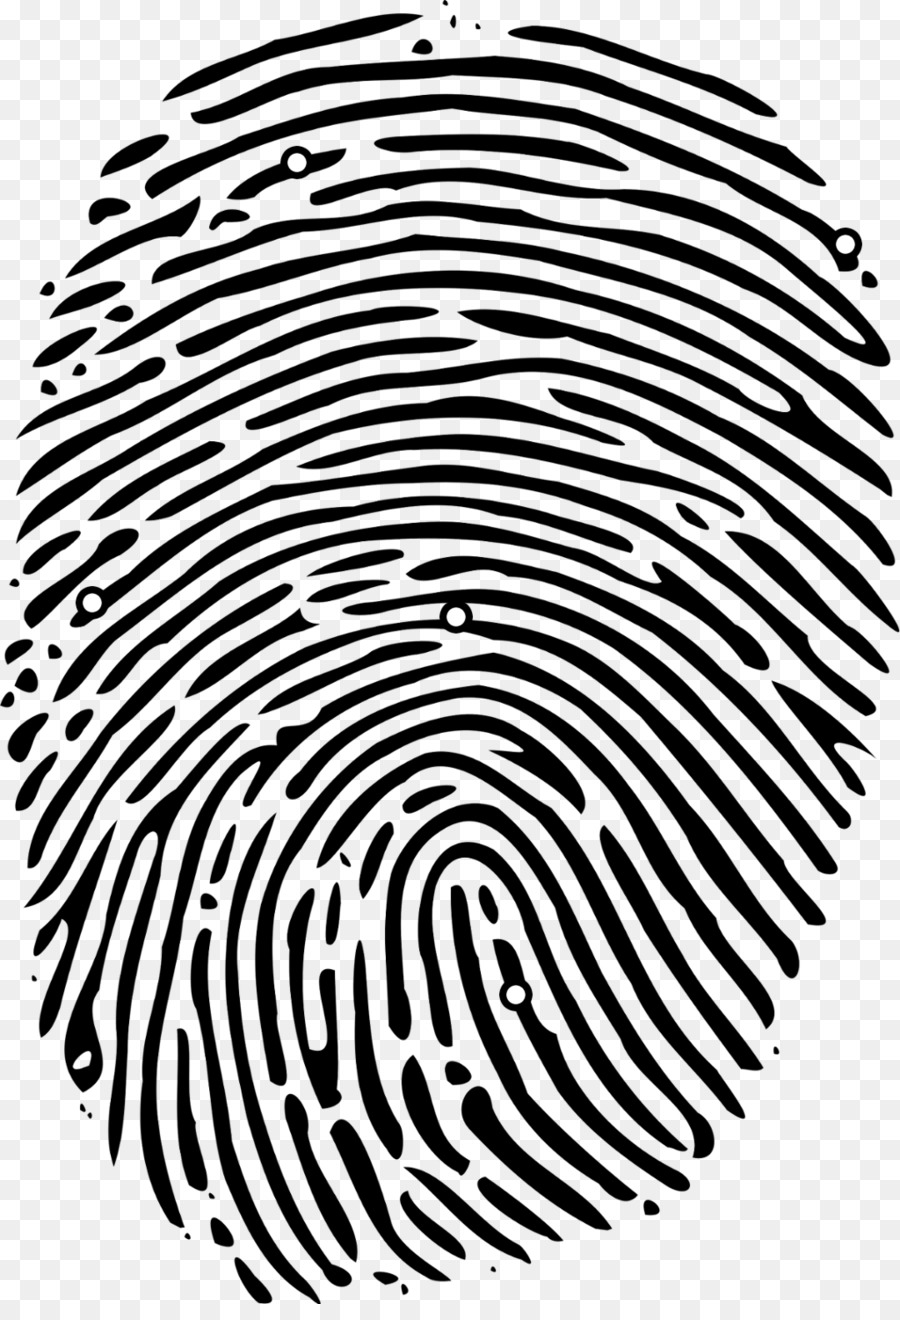 Fingerprint Computer Icons - loop vector png download - 1024*1484 - Free Transparent Fingerprint png Download.